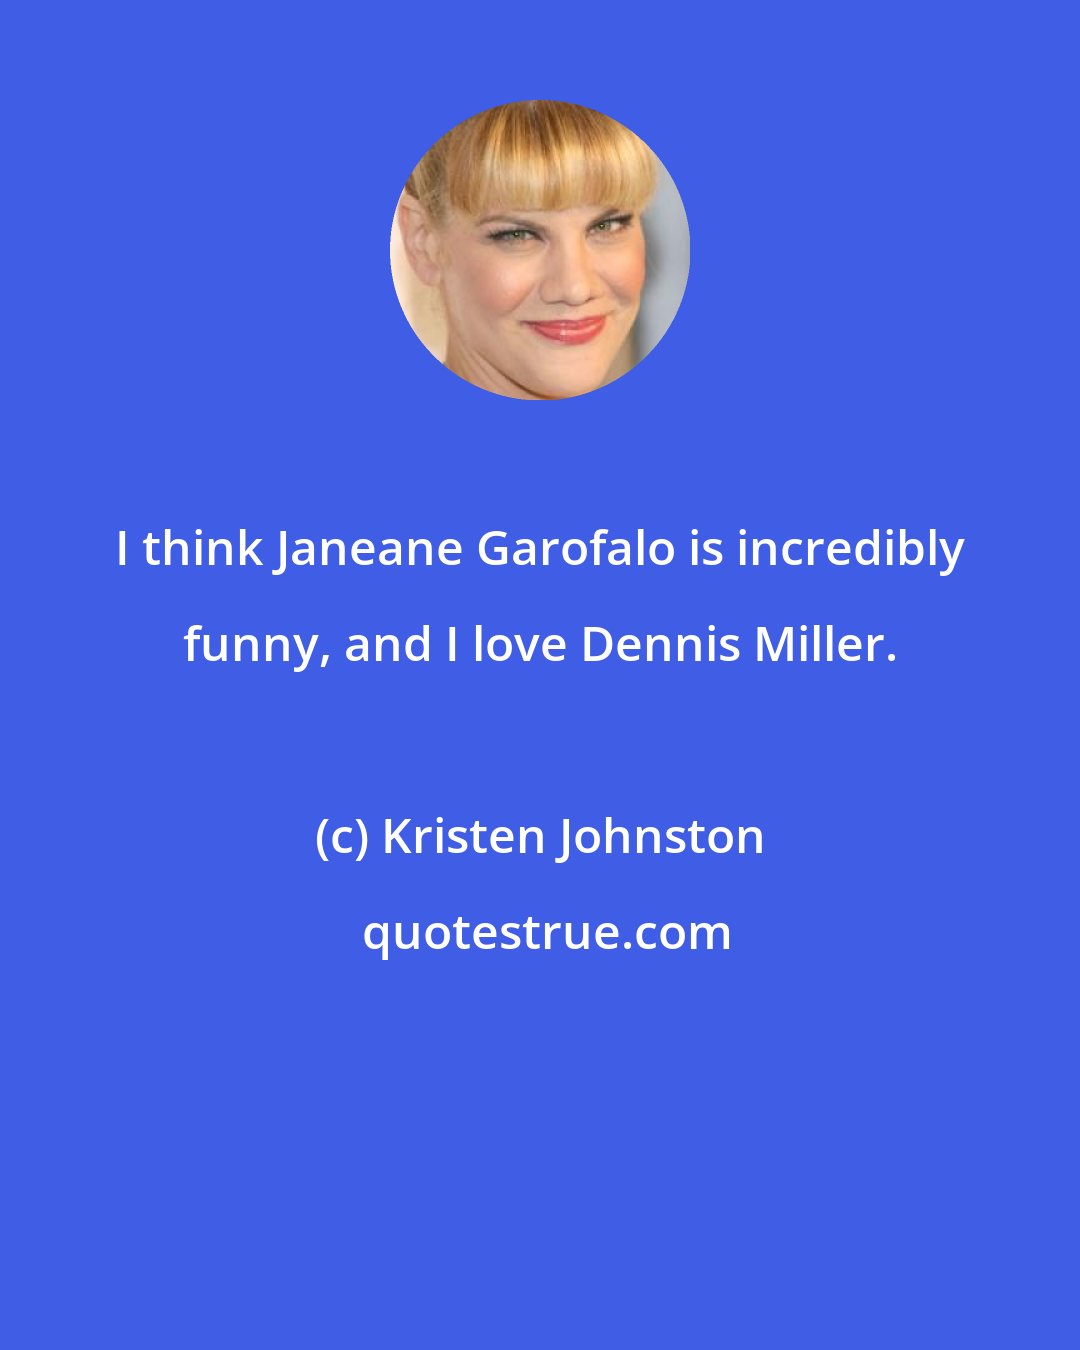 Kristen Johnston: I think Janeane Garofalo is incredibly funny, and I love Dennis Miller.